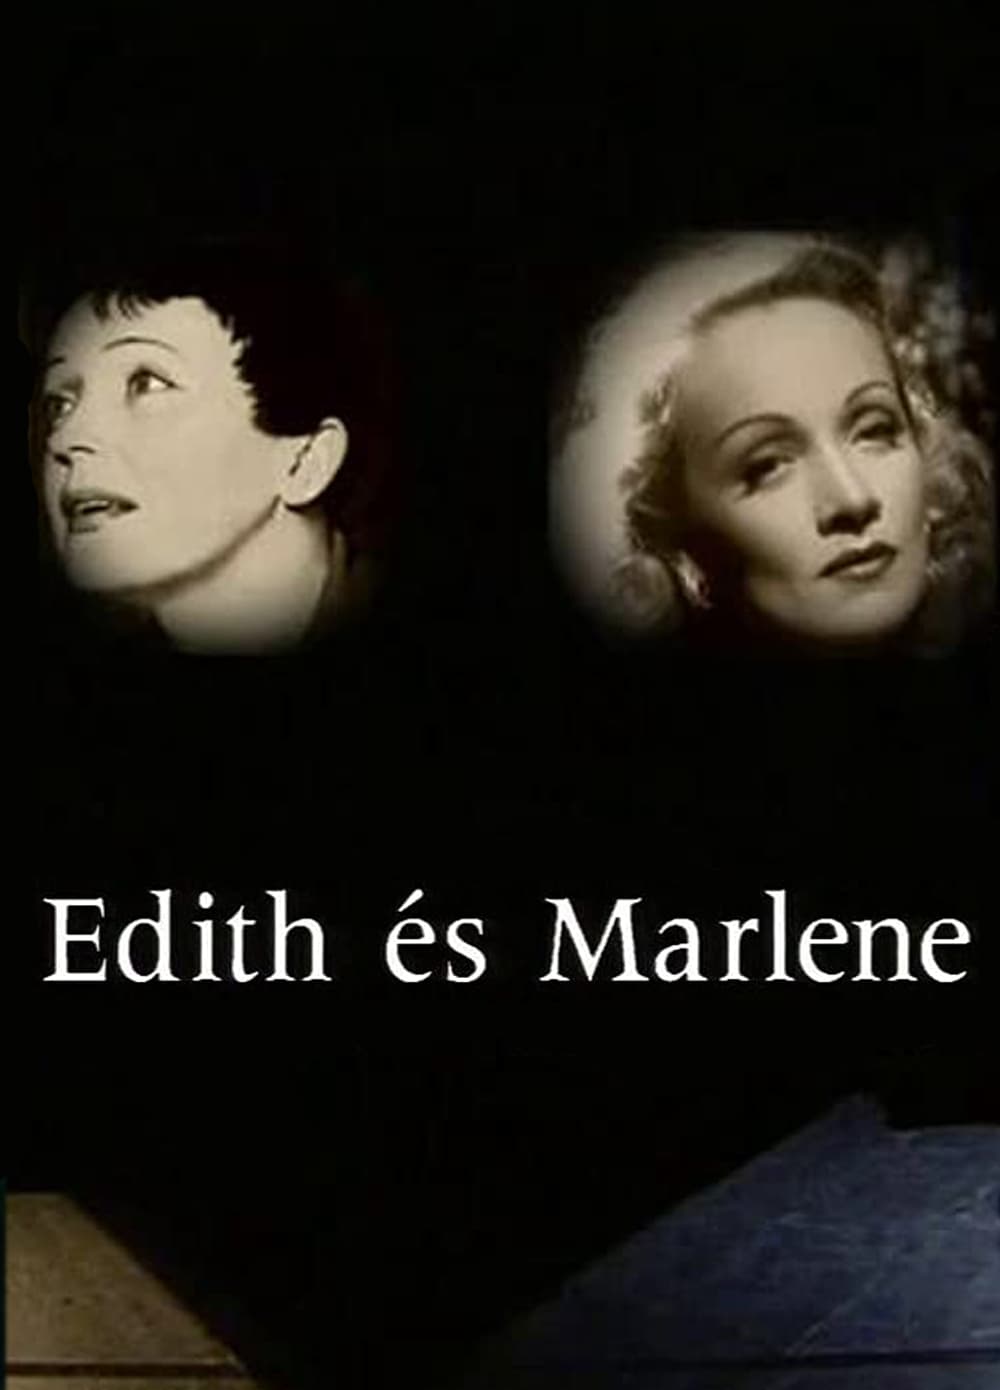 Edith and Marlene